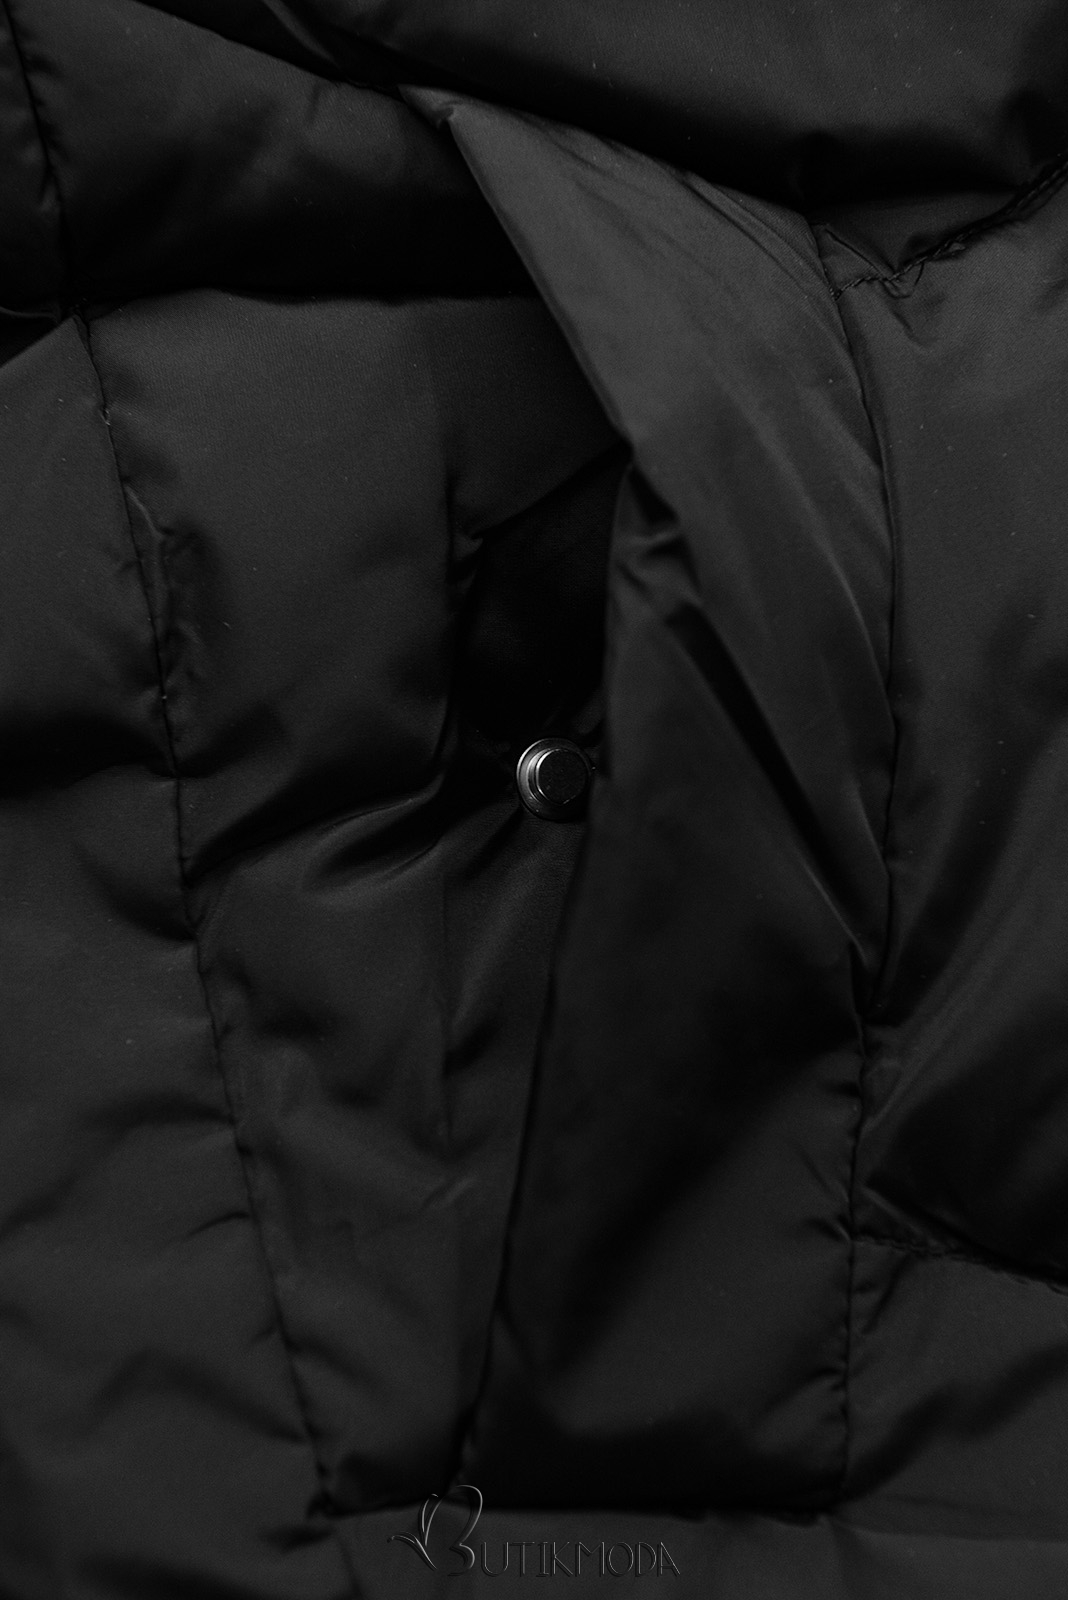 Black winter bomber jacket in an elongated cut